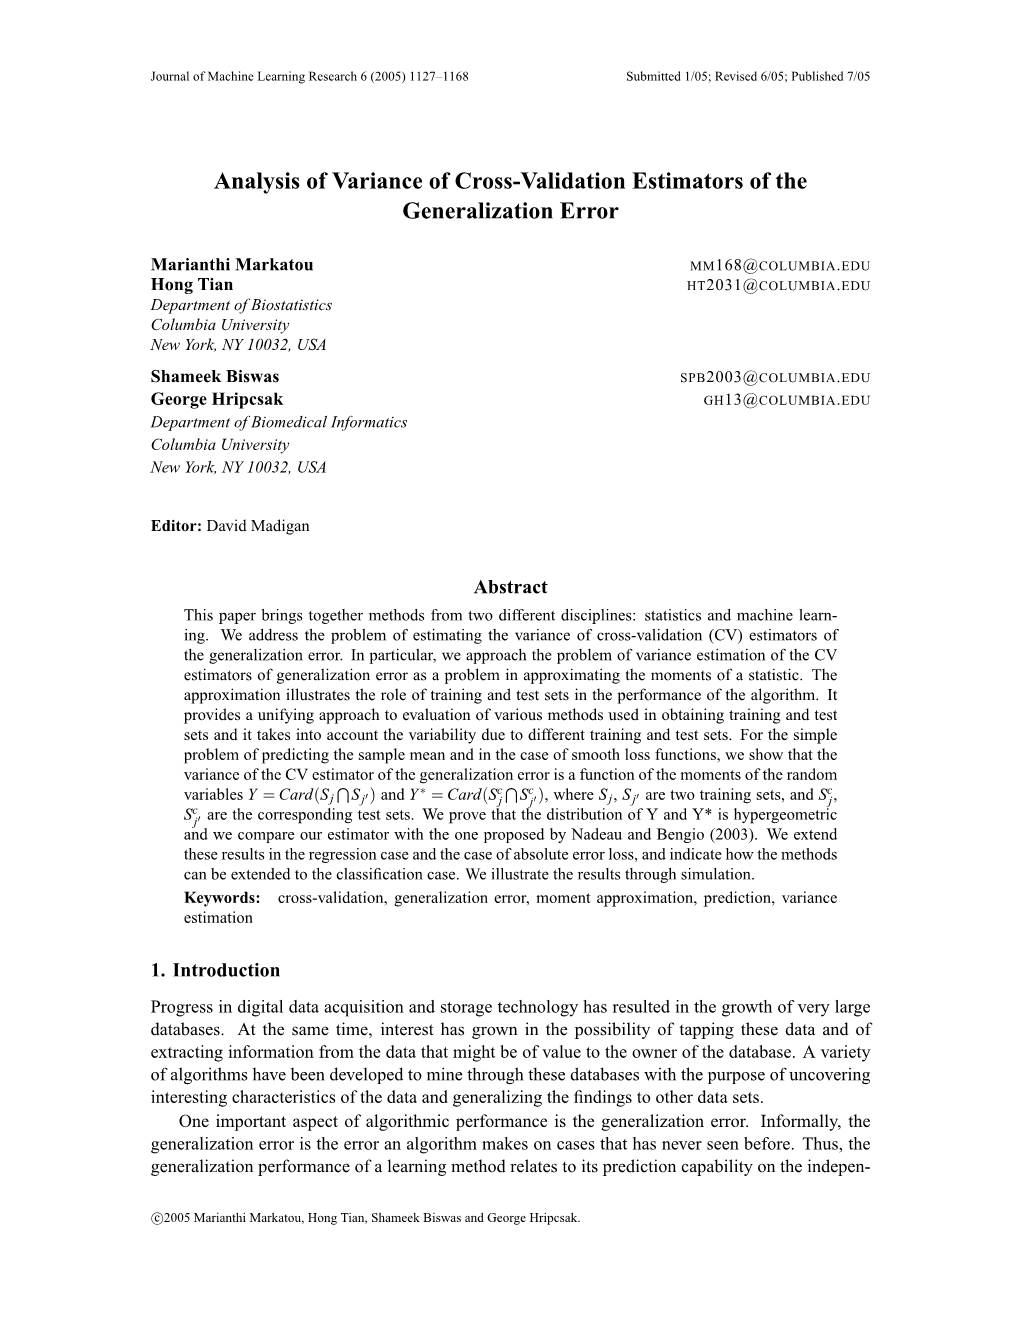 Analysis of Variance of Cross-Validation Estimators of the Generalization Error